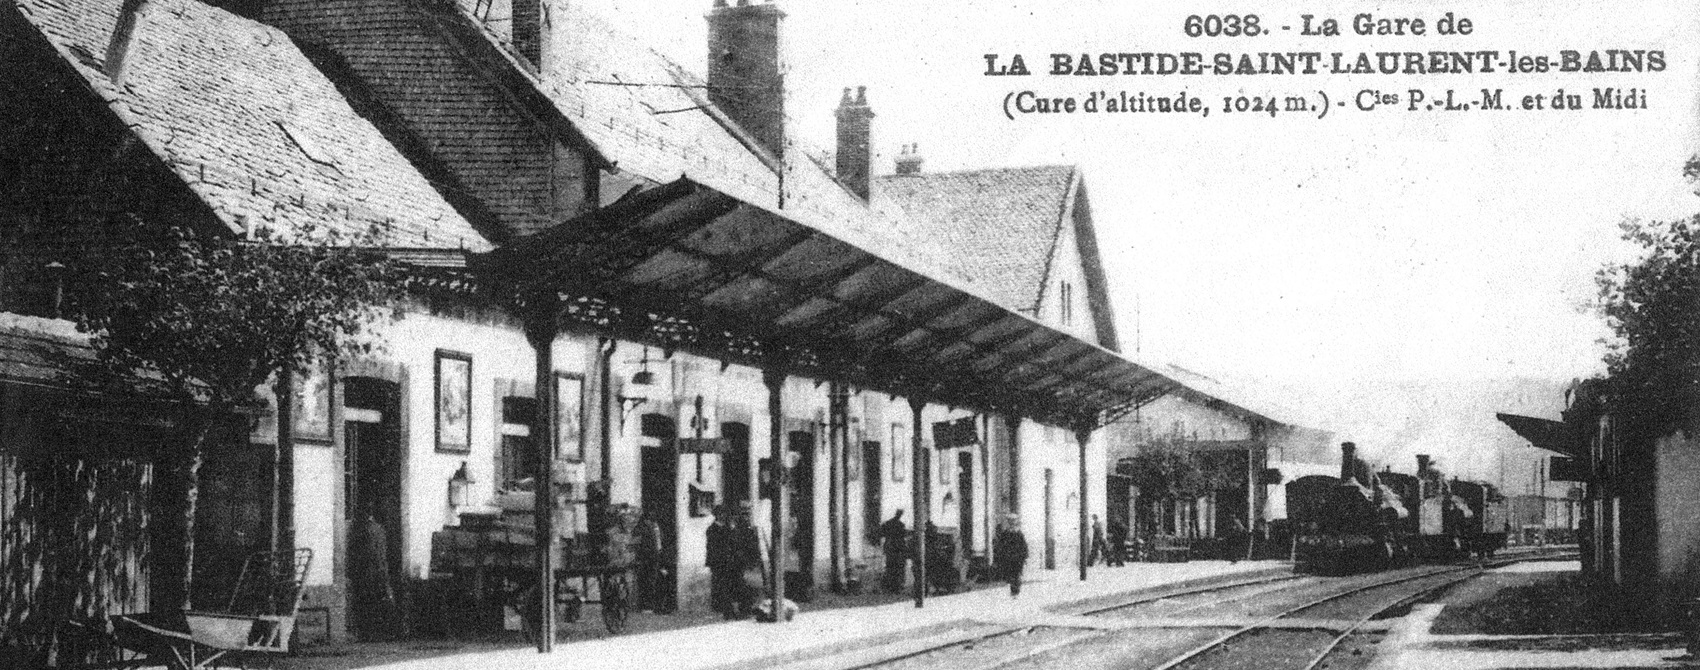 The Translozerien in La Bastide-Puylaurent